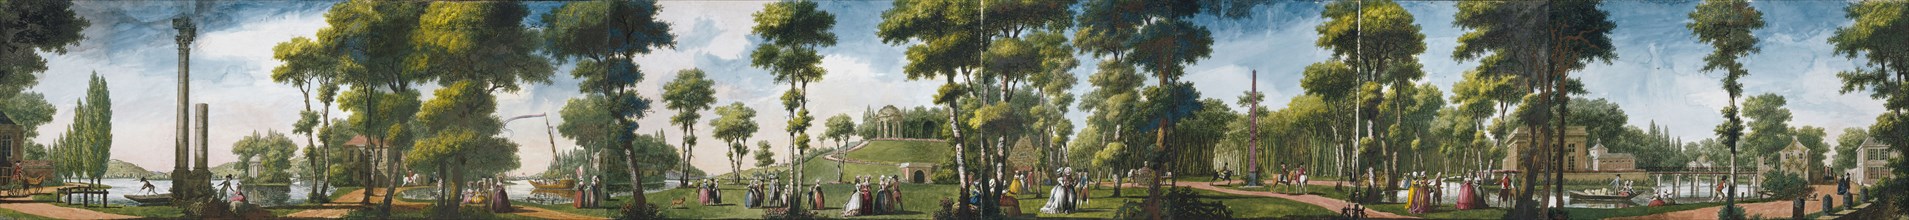 Figures Walking in a Parkland; Louis Carrogis de Carmontelle, French, 1717 - 1806, France; 1783 - 1800; Watercolor and gouache